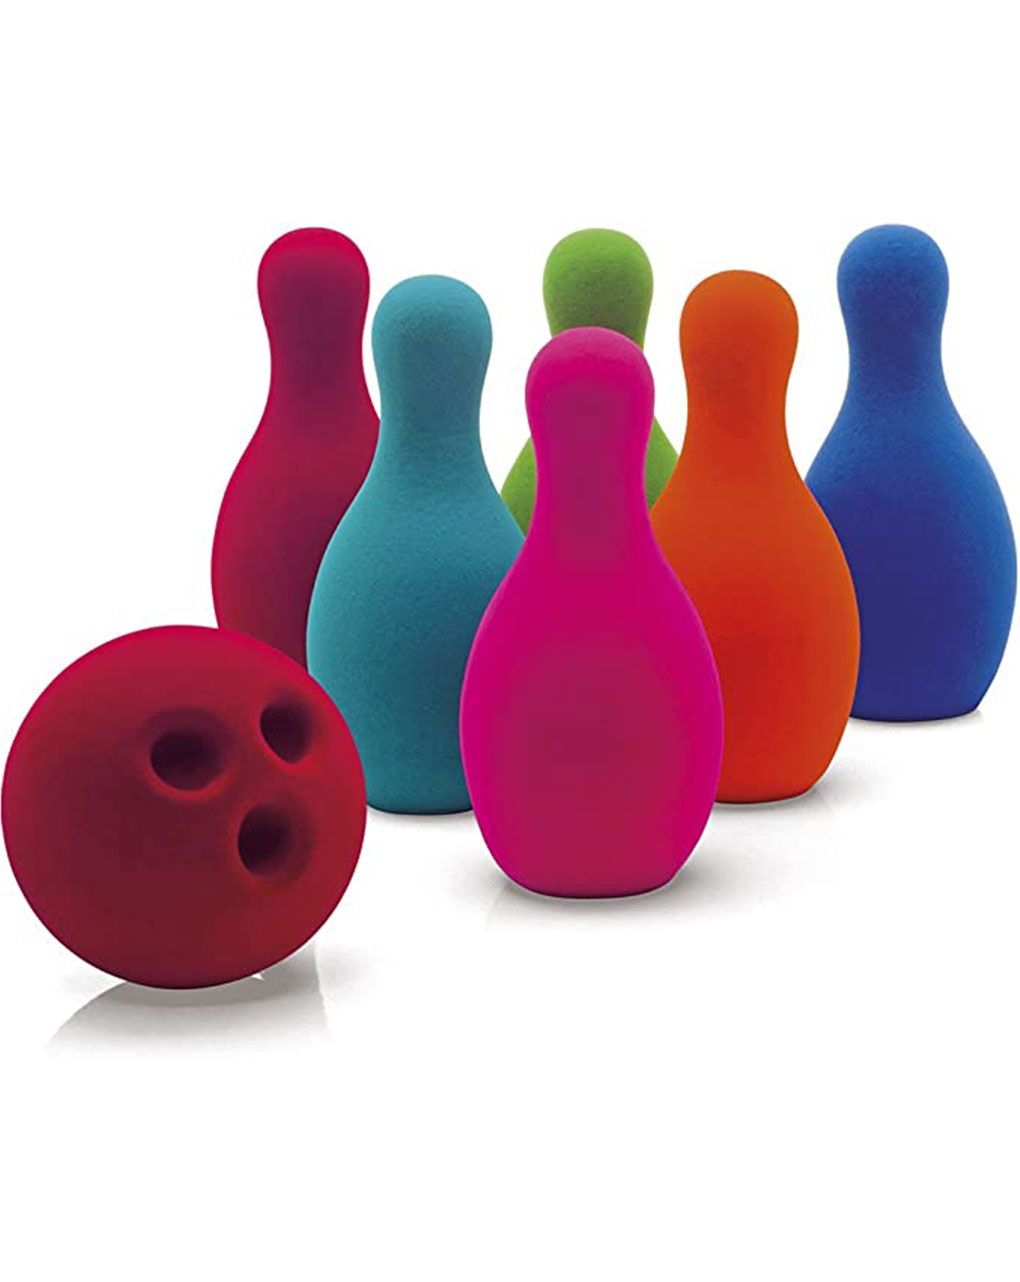 Pequeno conjunto de bowling - rubbabu - Rubbabu